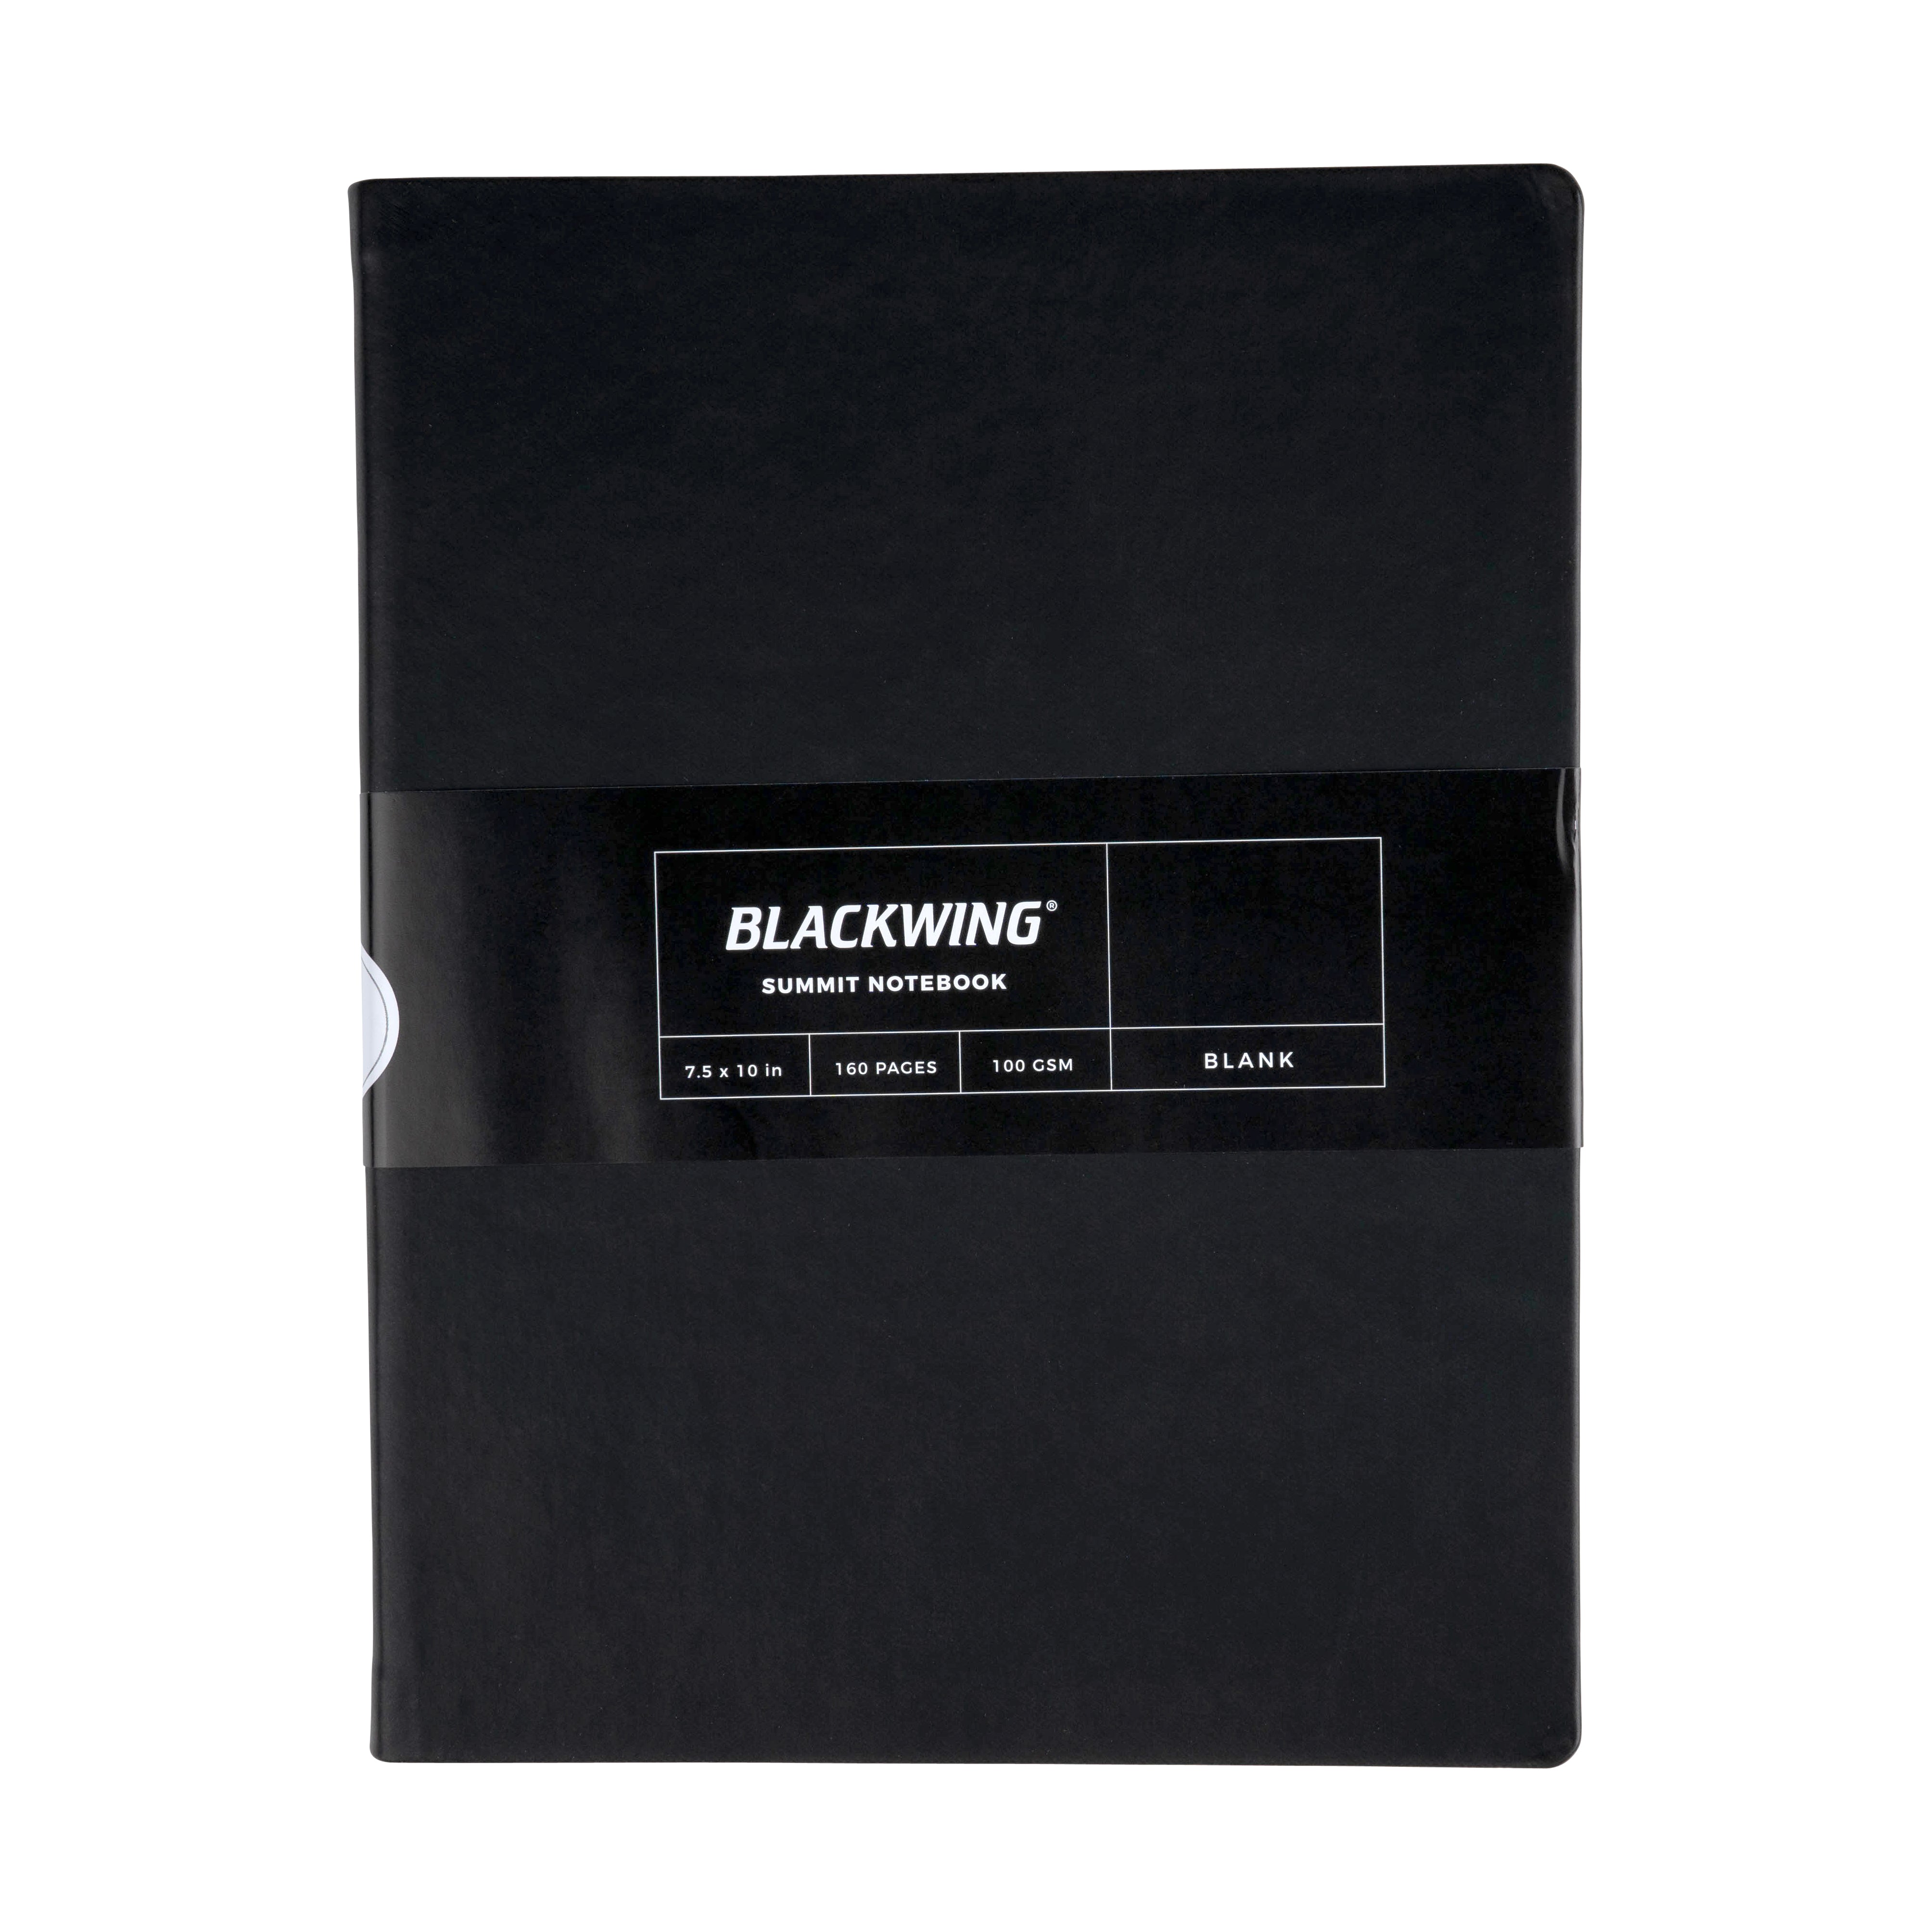 Blackwing Summit Notebook - Blank Paper